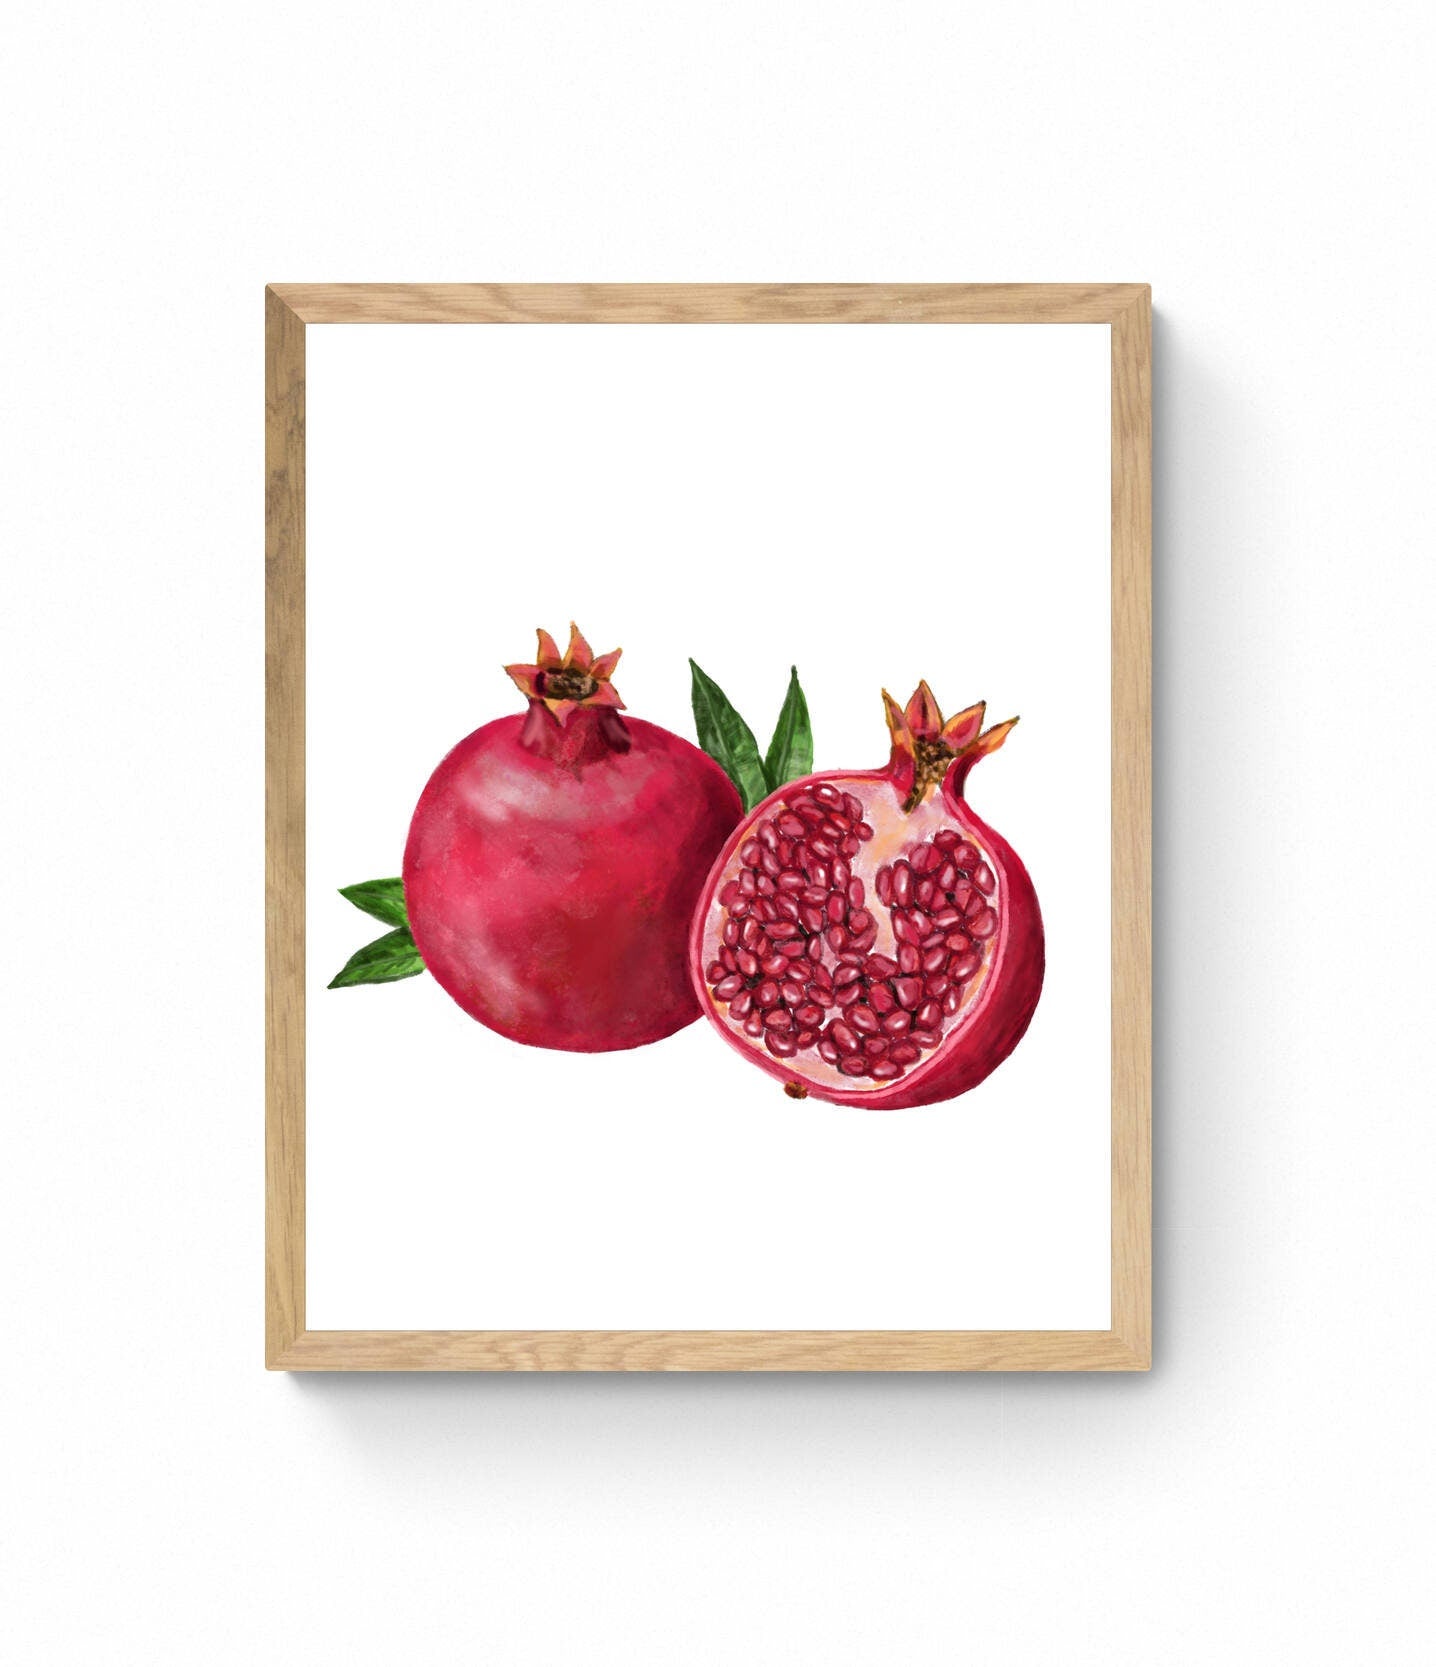 Pomegranate Art Print, Pomegranate Art, Kitchen Wall Hanging, Dining Room Decor, Berry Painting, Fruit Illustration, Farmhouse Wall Decor